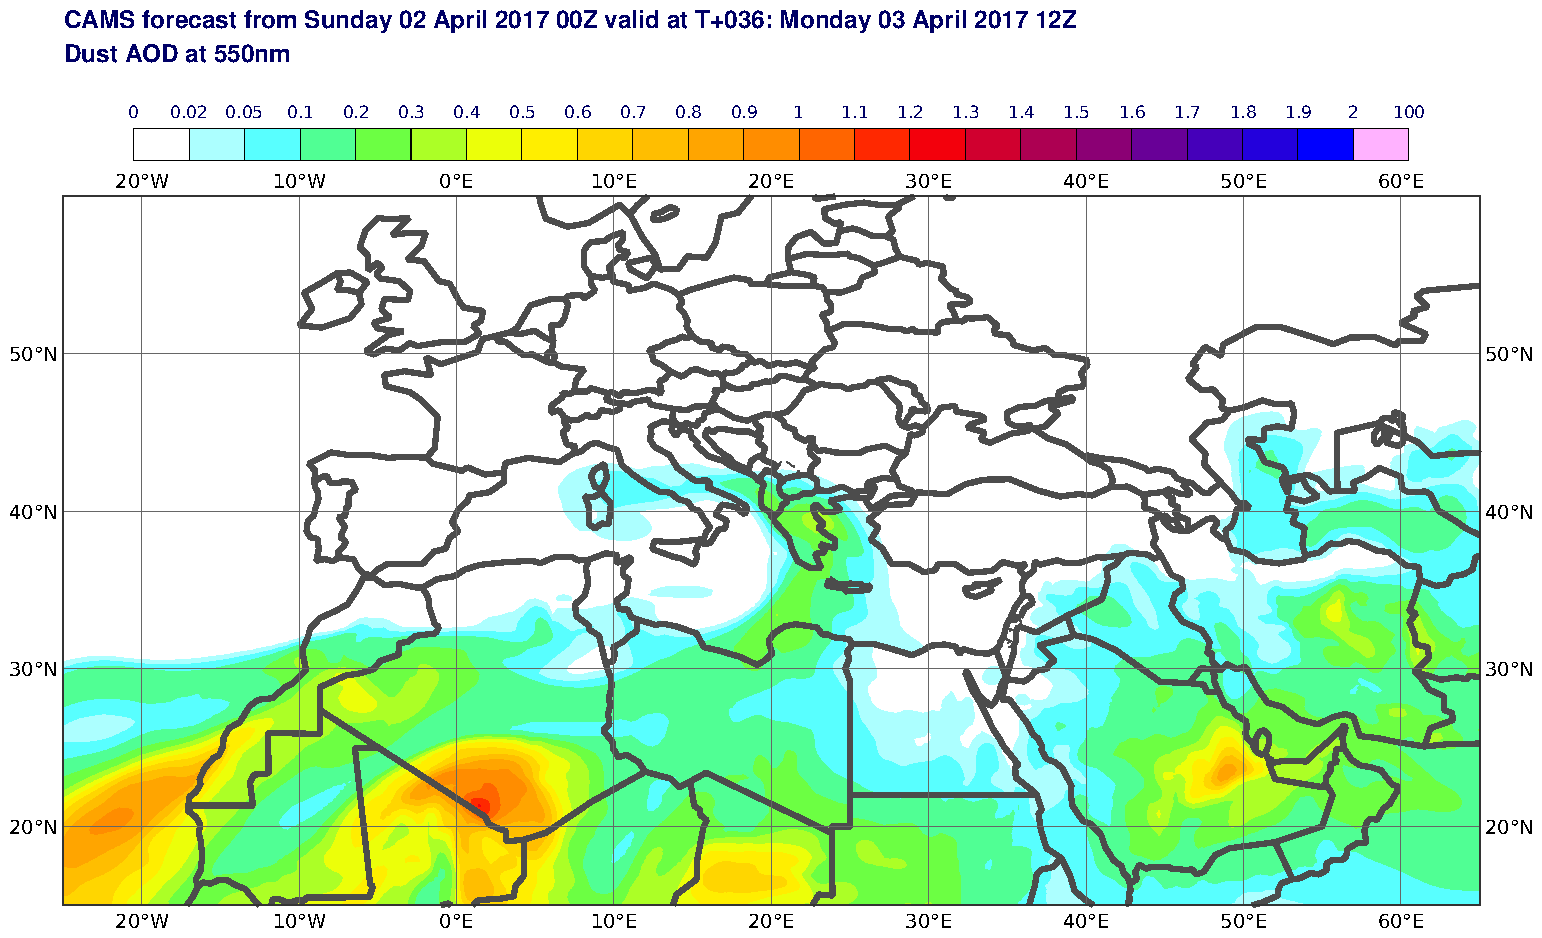 Dust AOD at 550nm valid at T36 - 2017-04-03 12:00